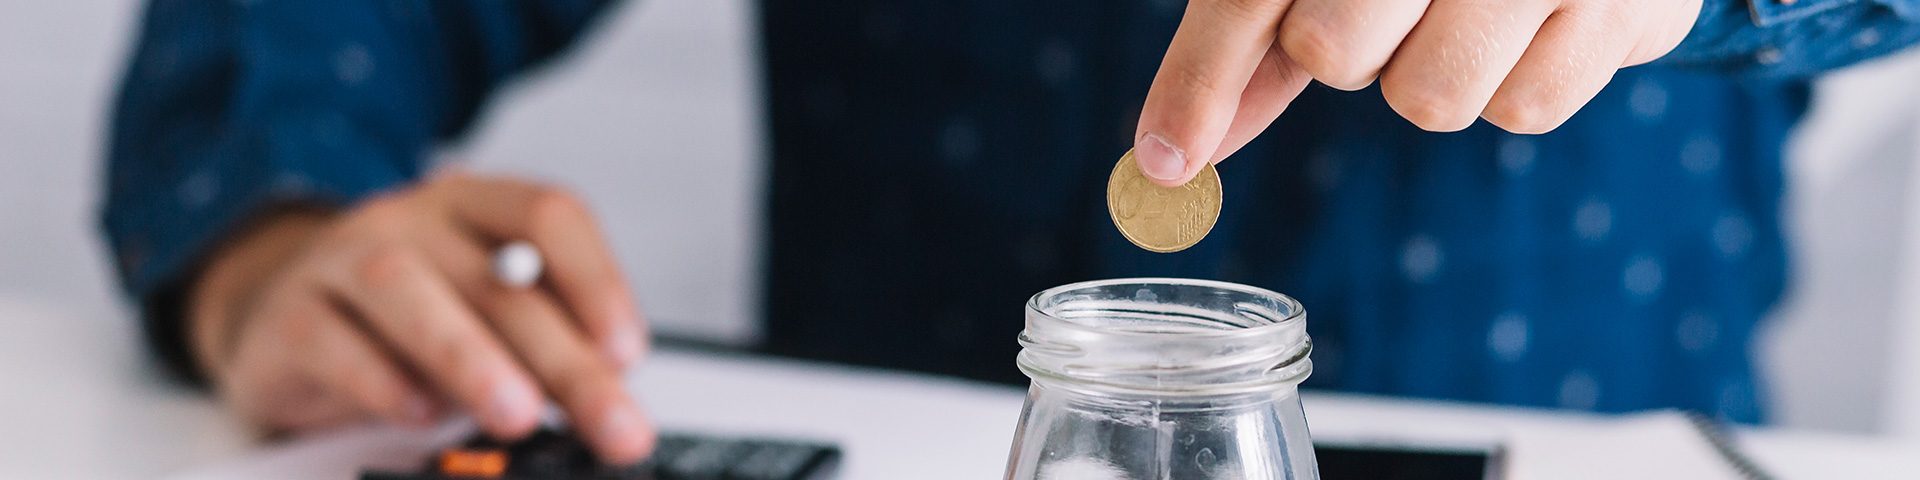 hand-putting-coin-jar-using-calculator